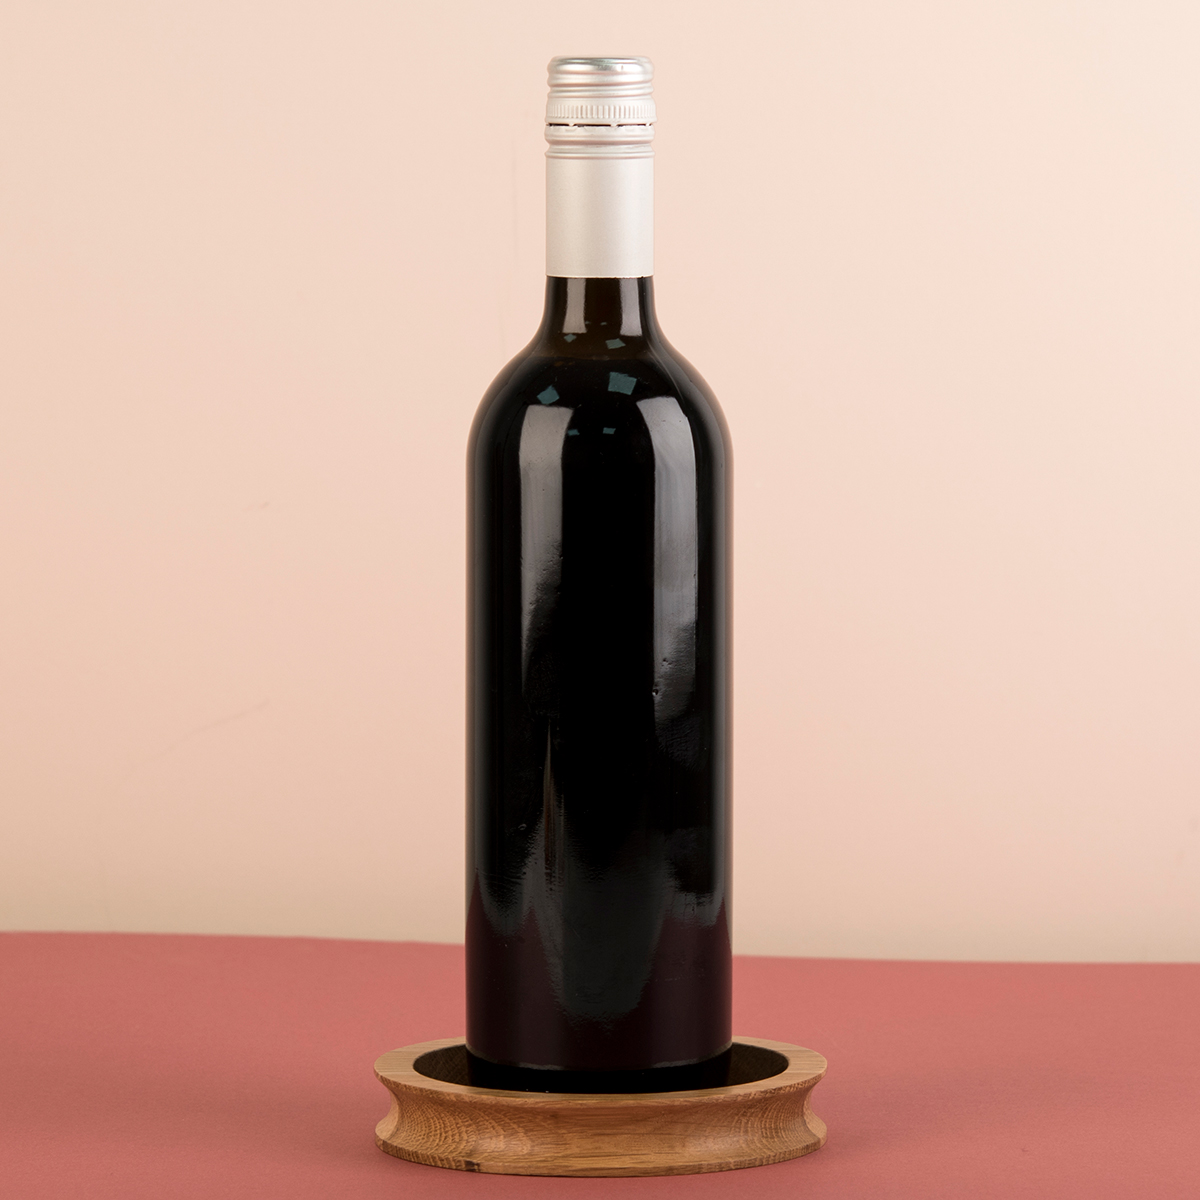 Personalised Wooden Wine Bottle Coaster - Save Water, Drink Wine